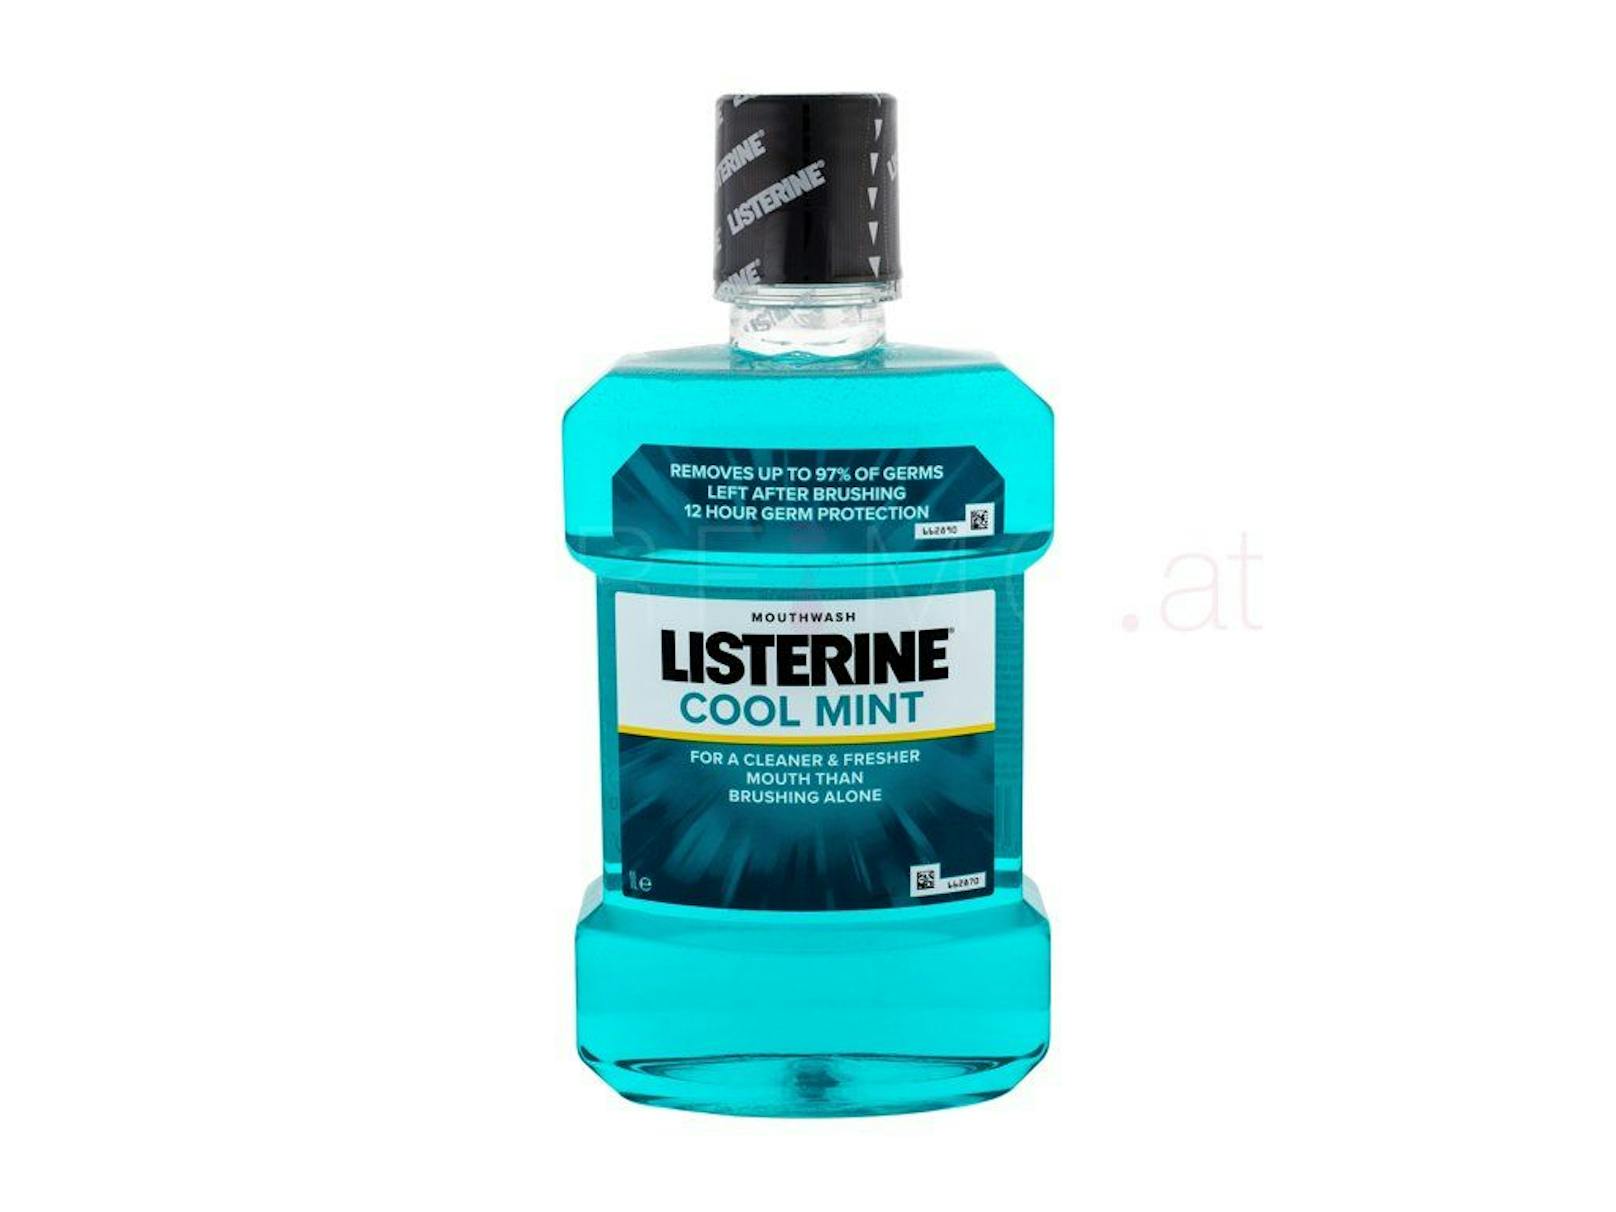 Listerine cool mint